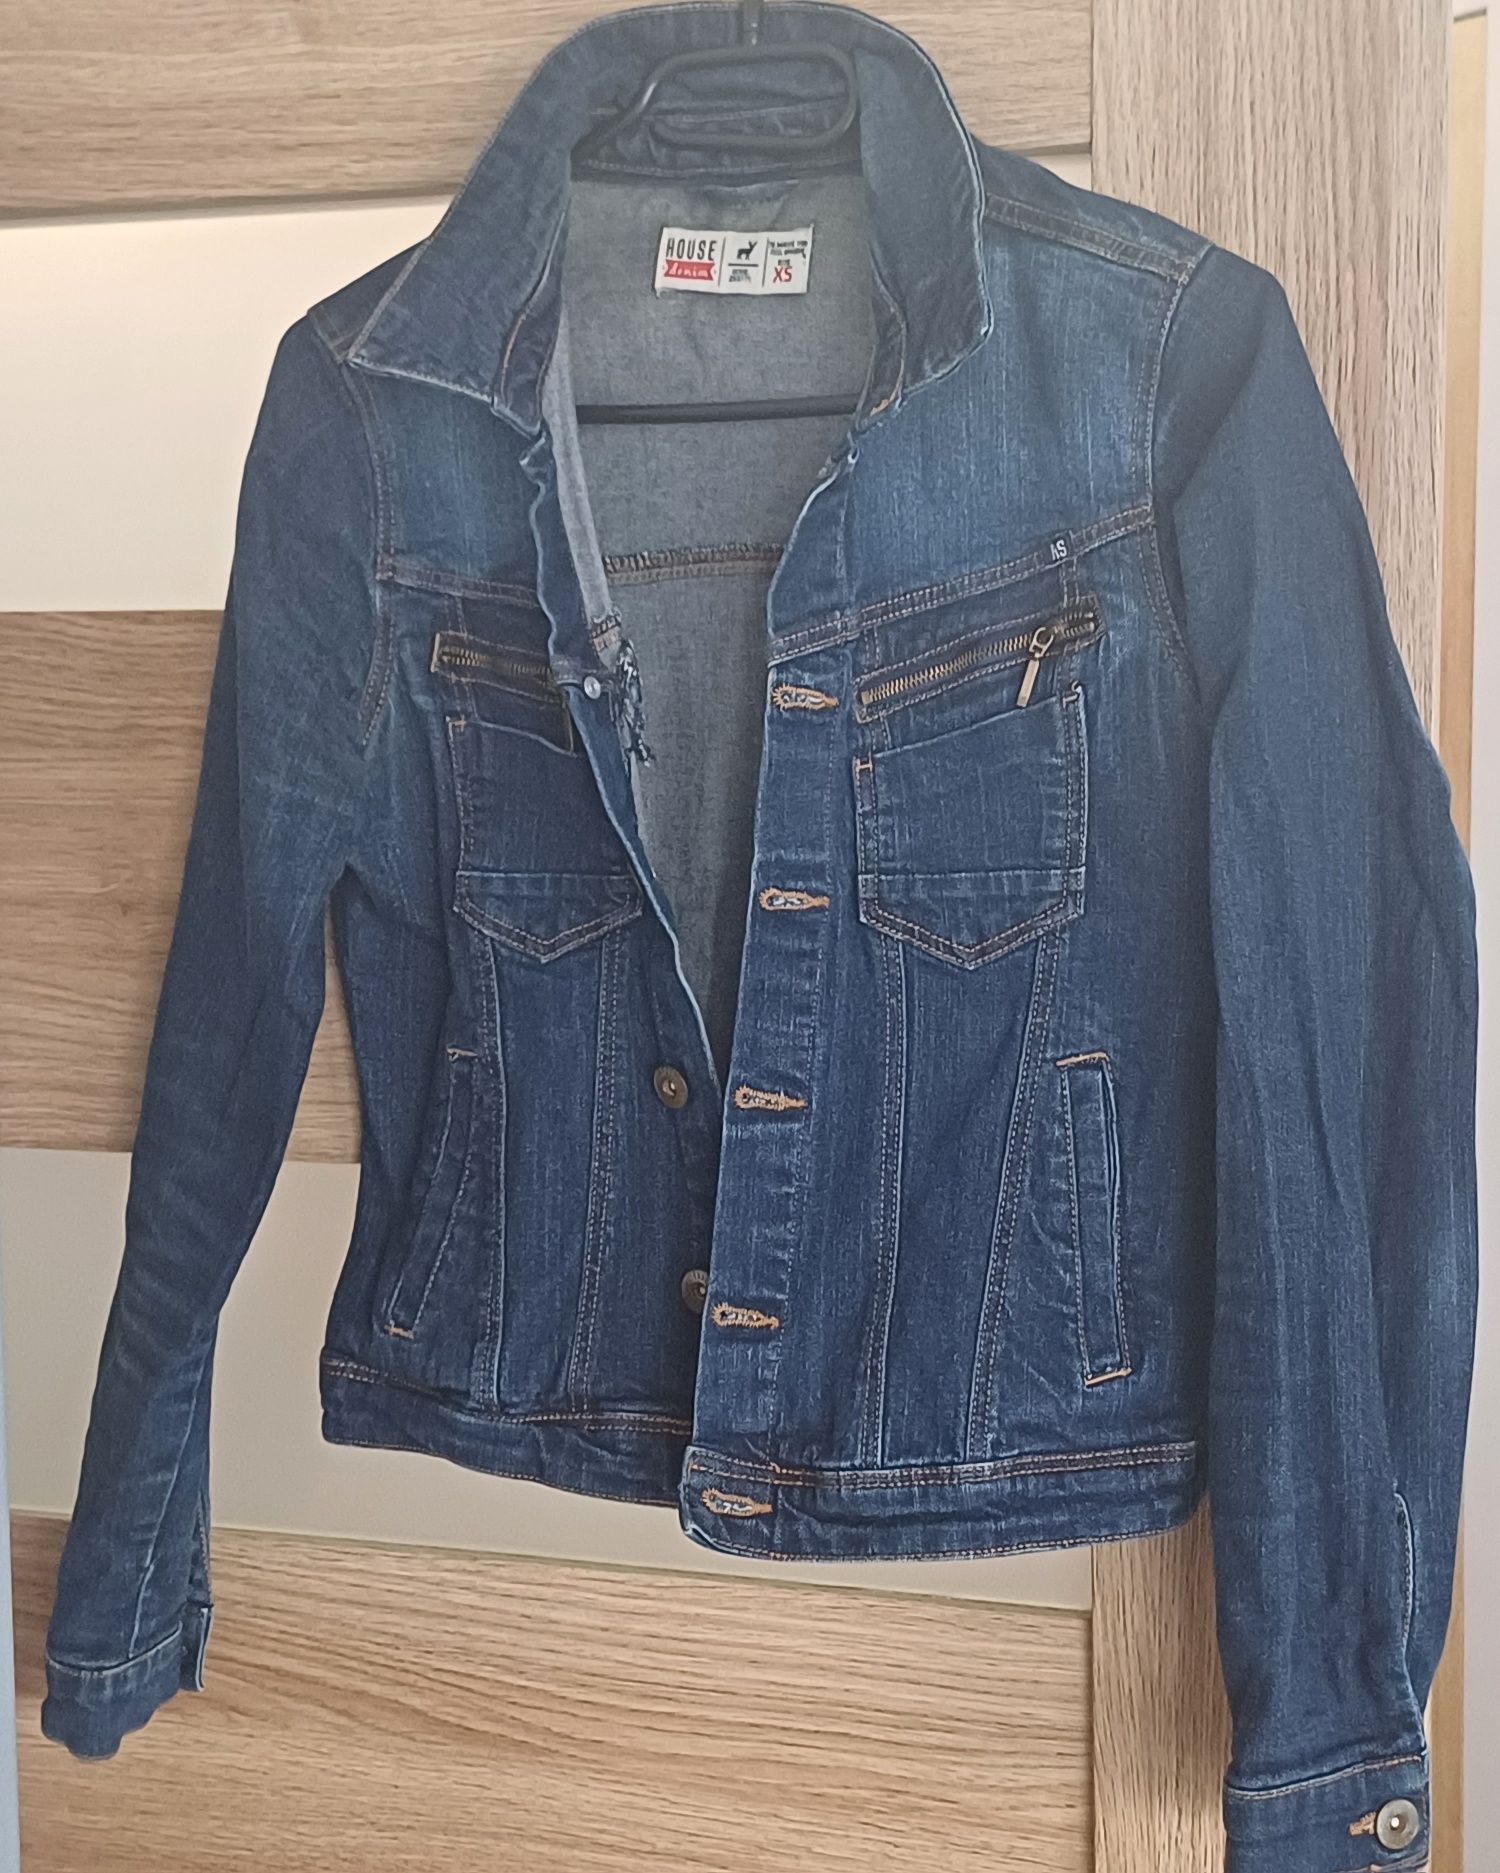 Bluza jeans katana House ciemny granat rozmiar XS,  34 tylko 14 zł